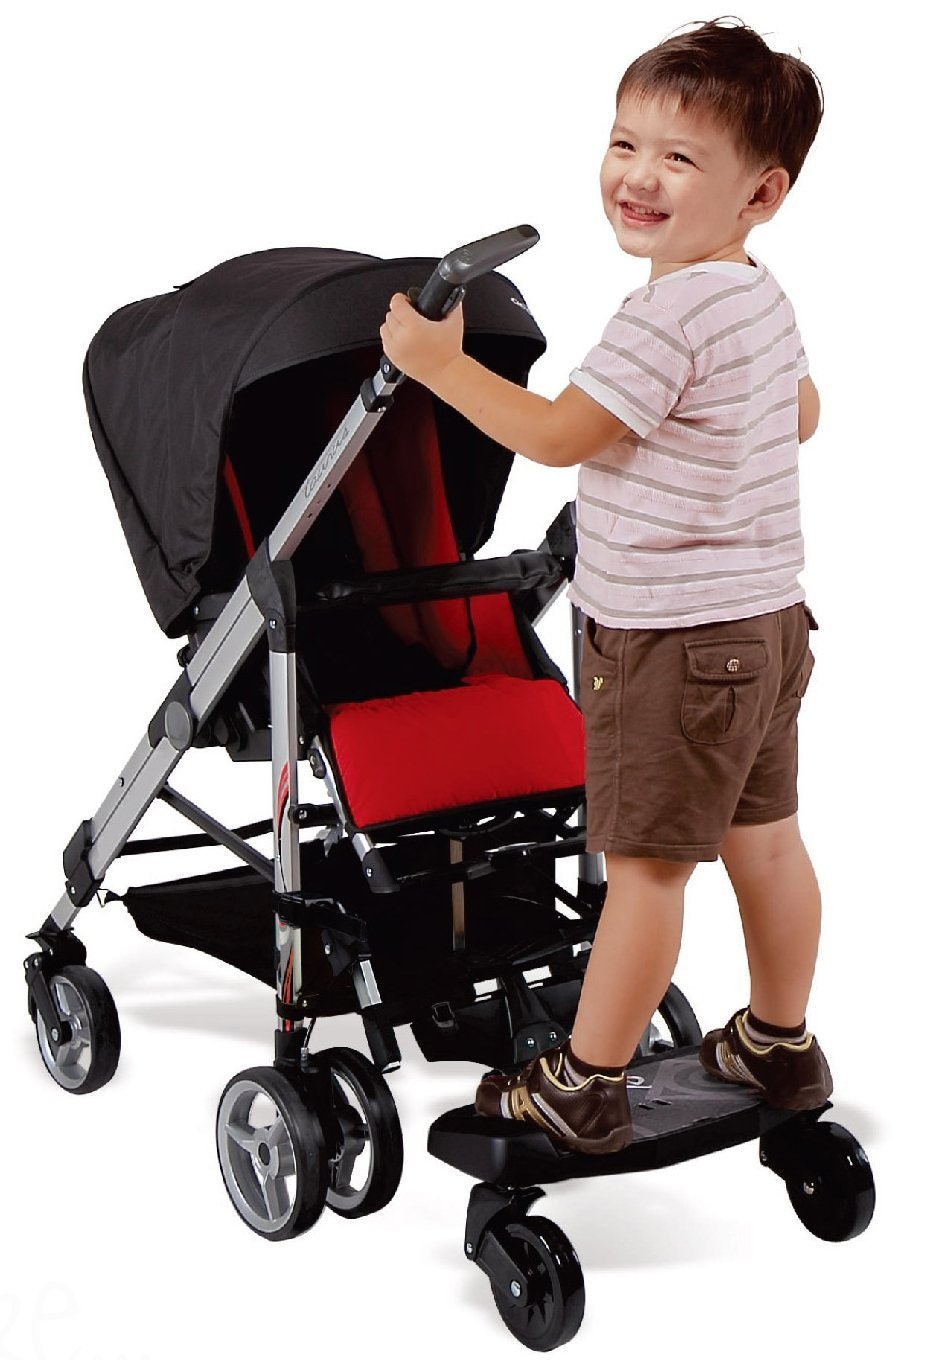 stroller attachment for older child